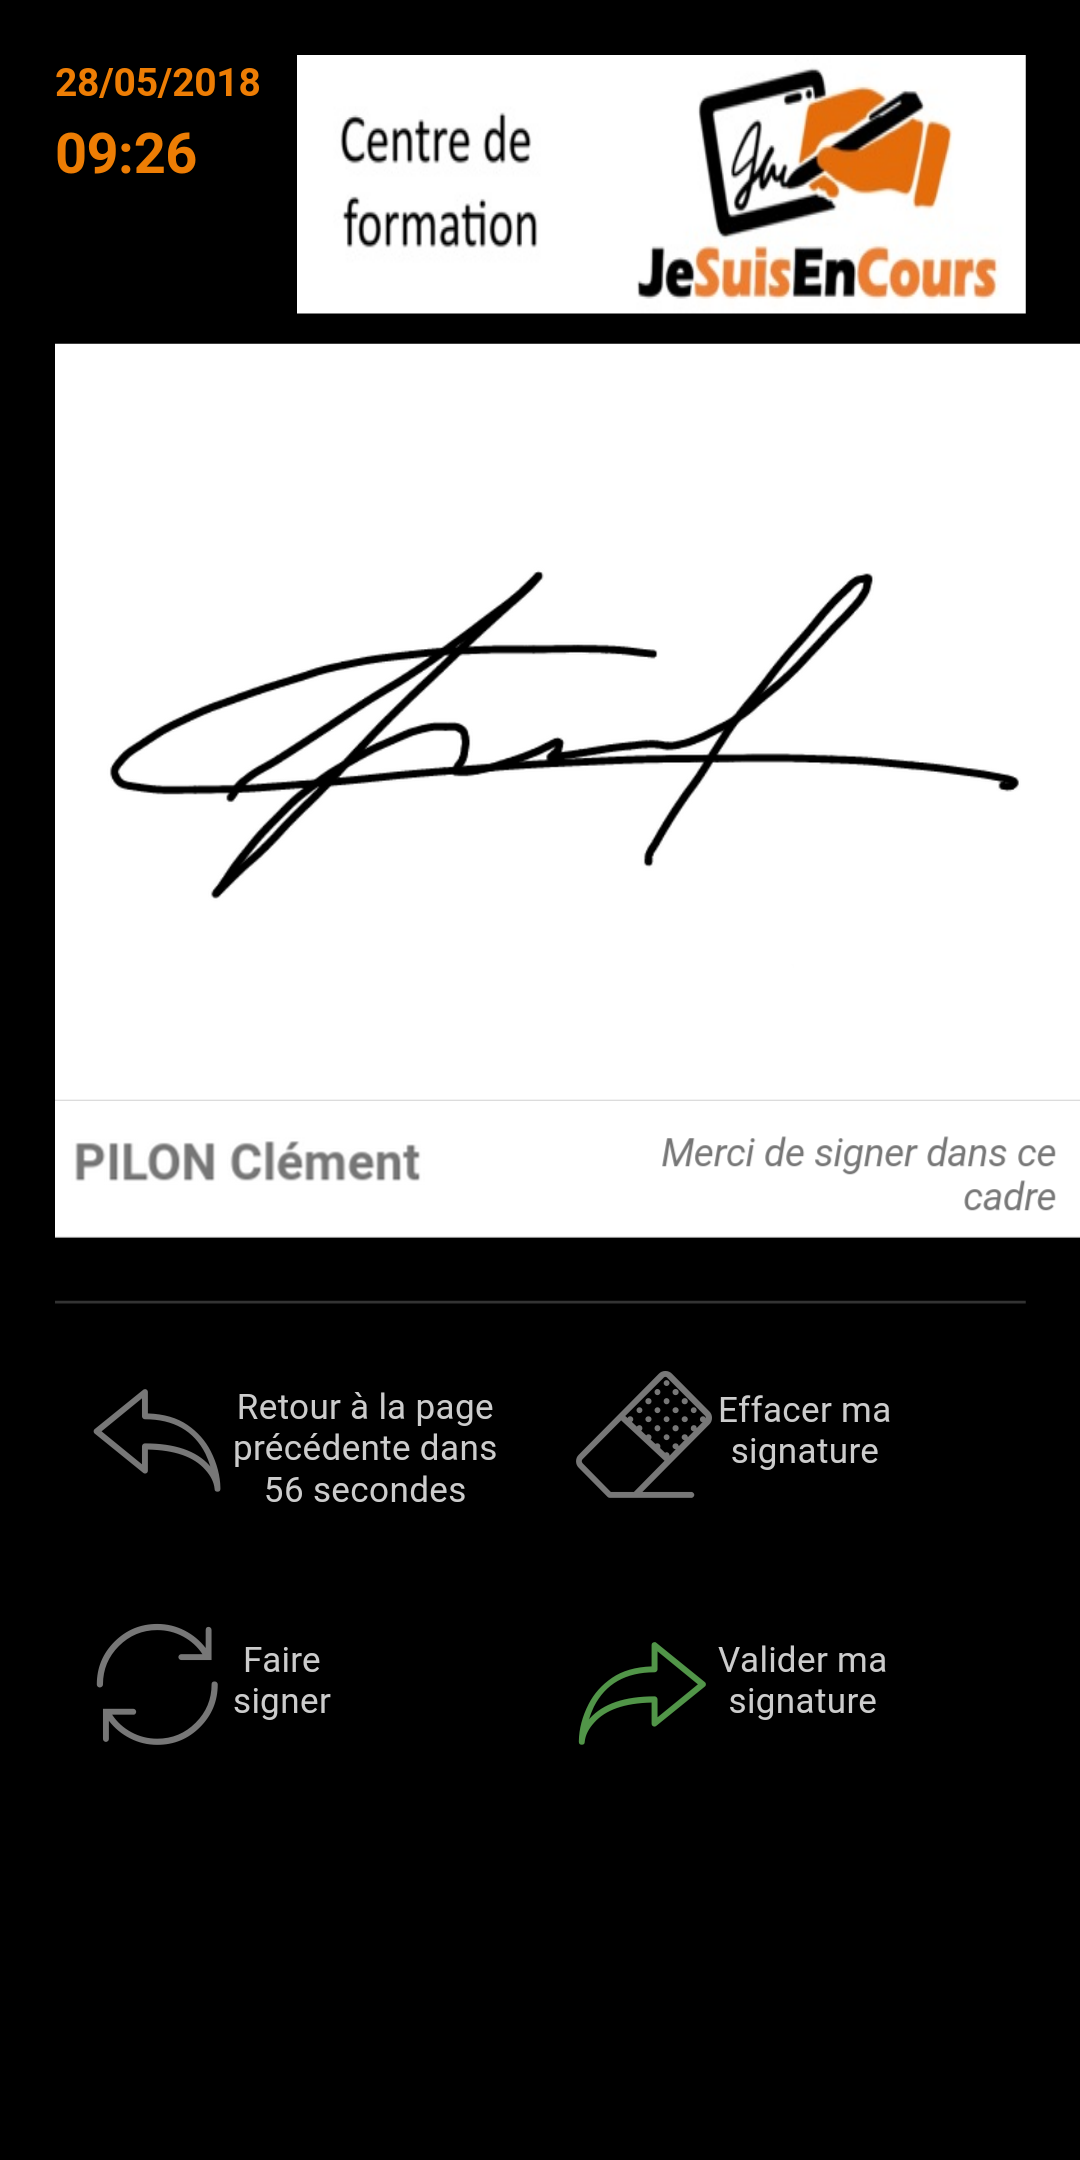 Signature mobile